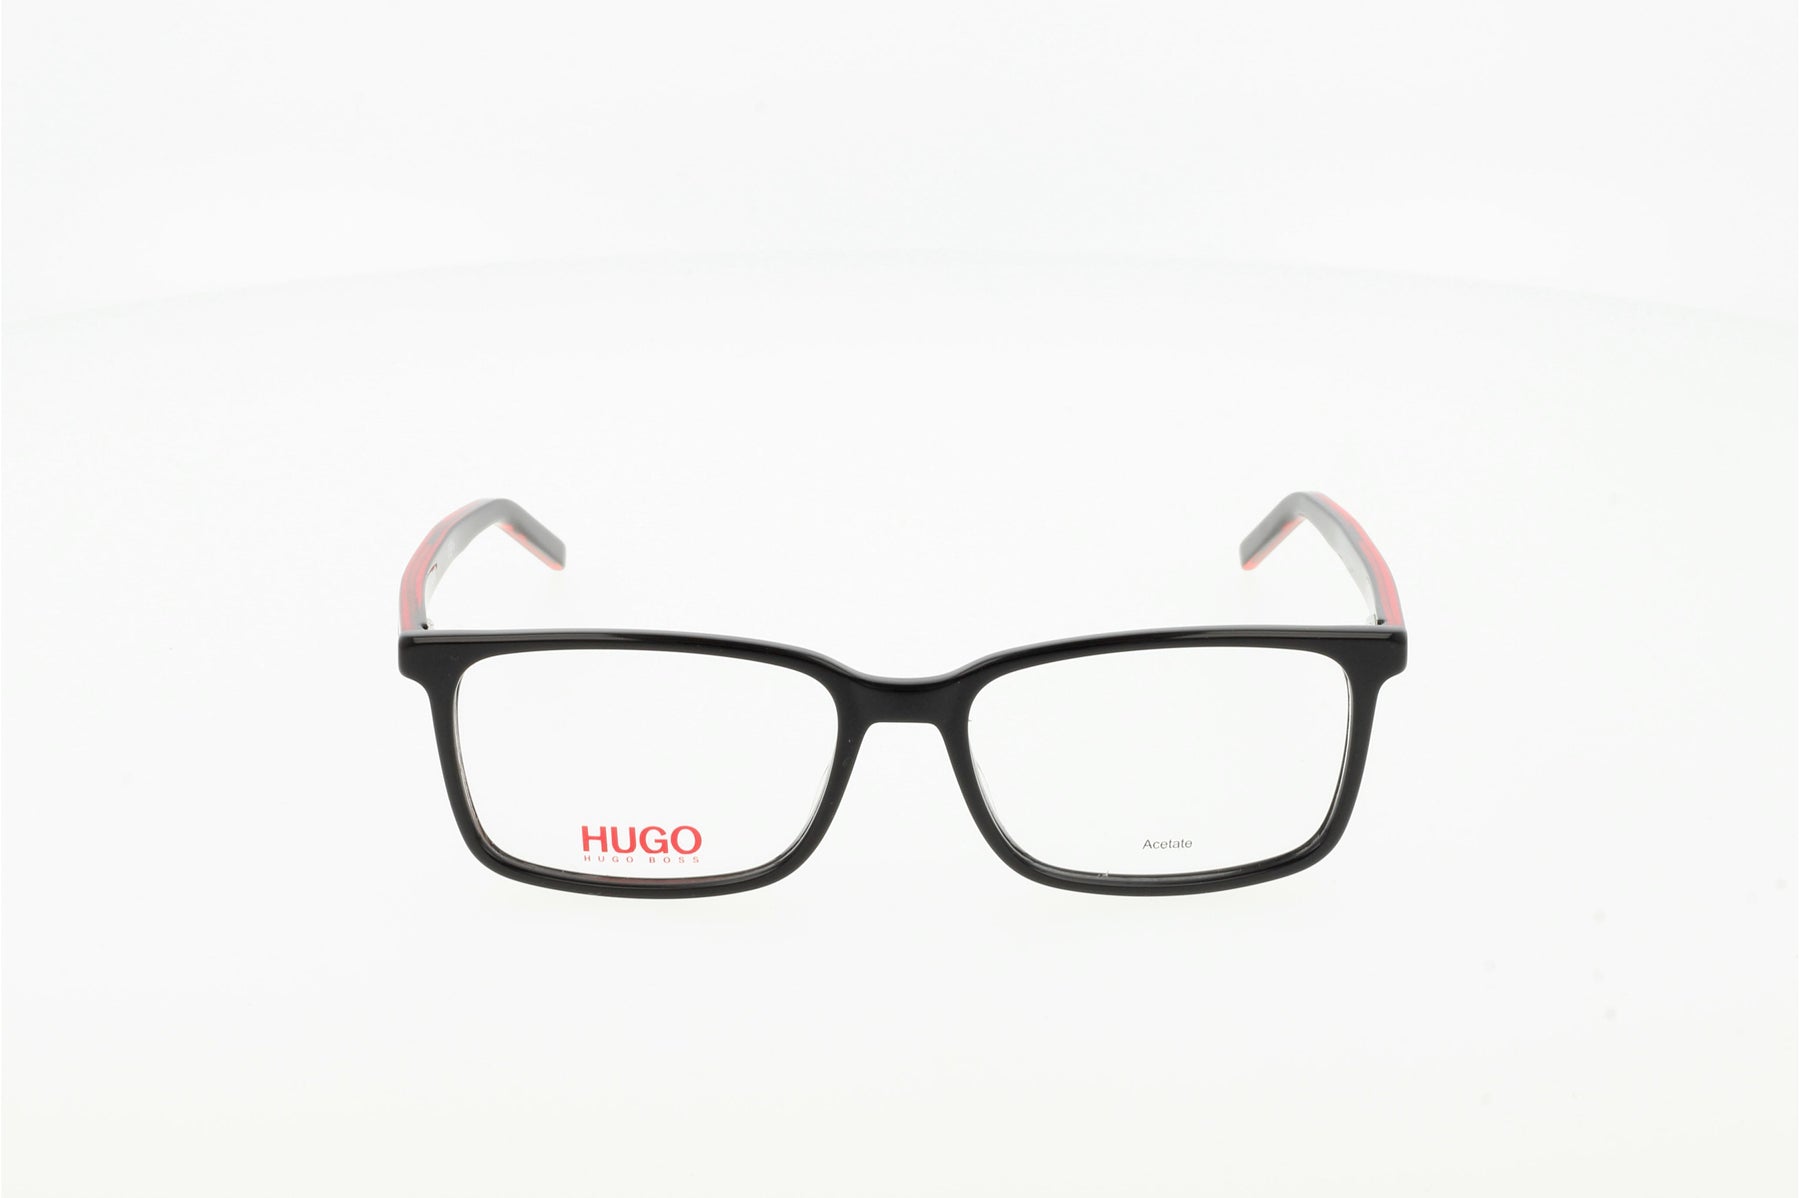 Vista-1 - Gafas oftálmicas Hugo HG 1029 Hombre Color Negro